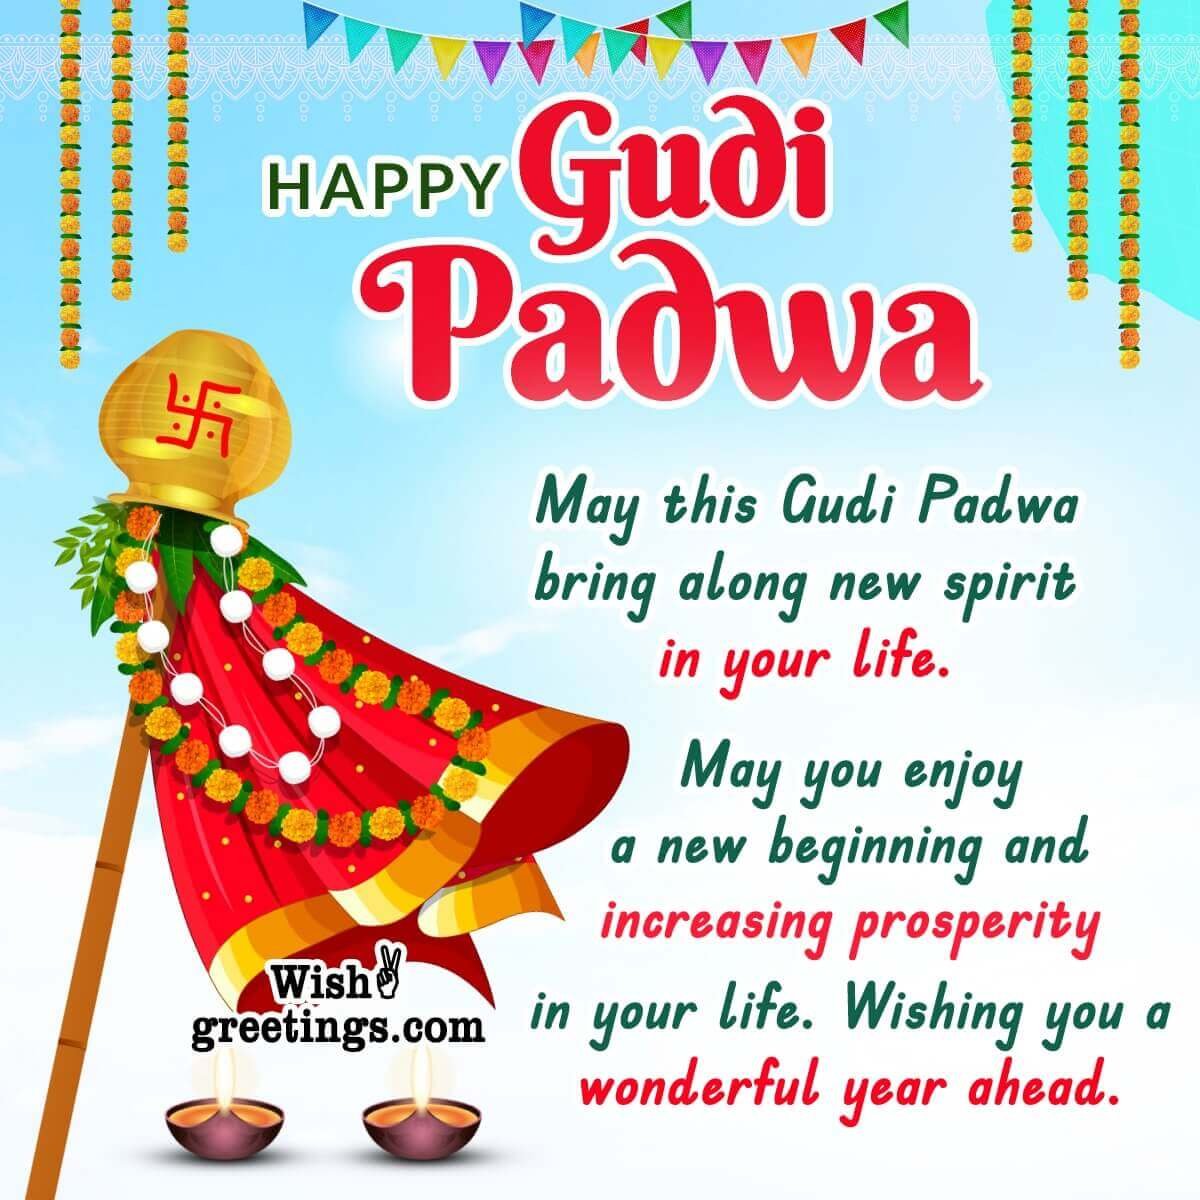 Happy Gudi Padwa Wishes Messages - Wish Greetings